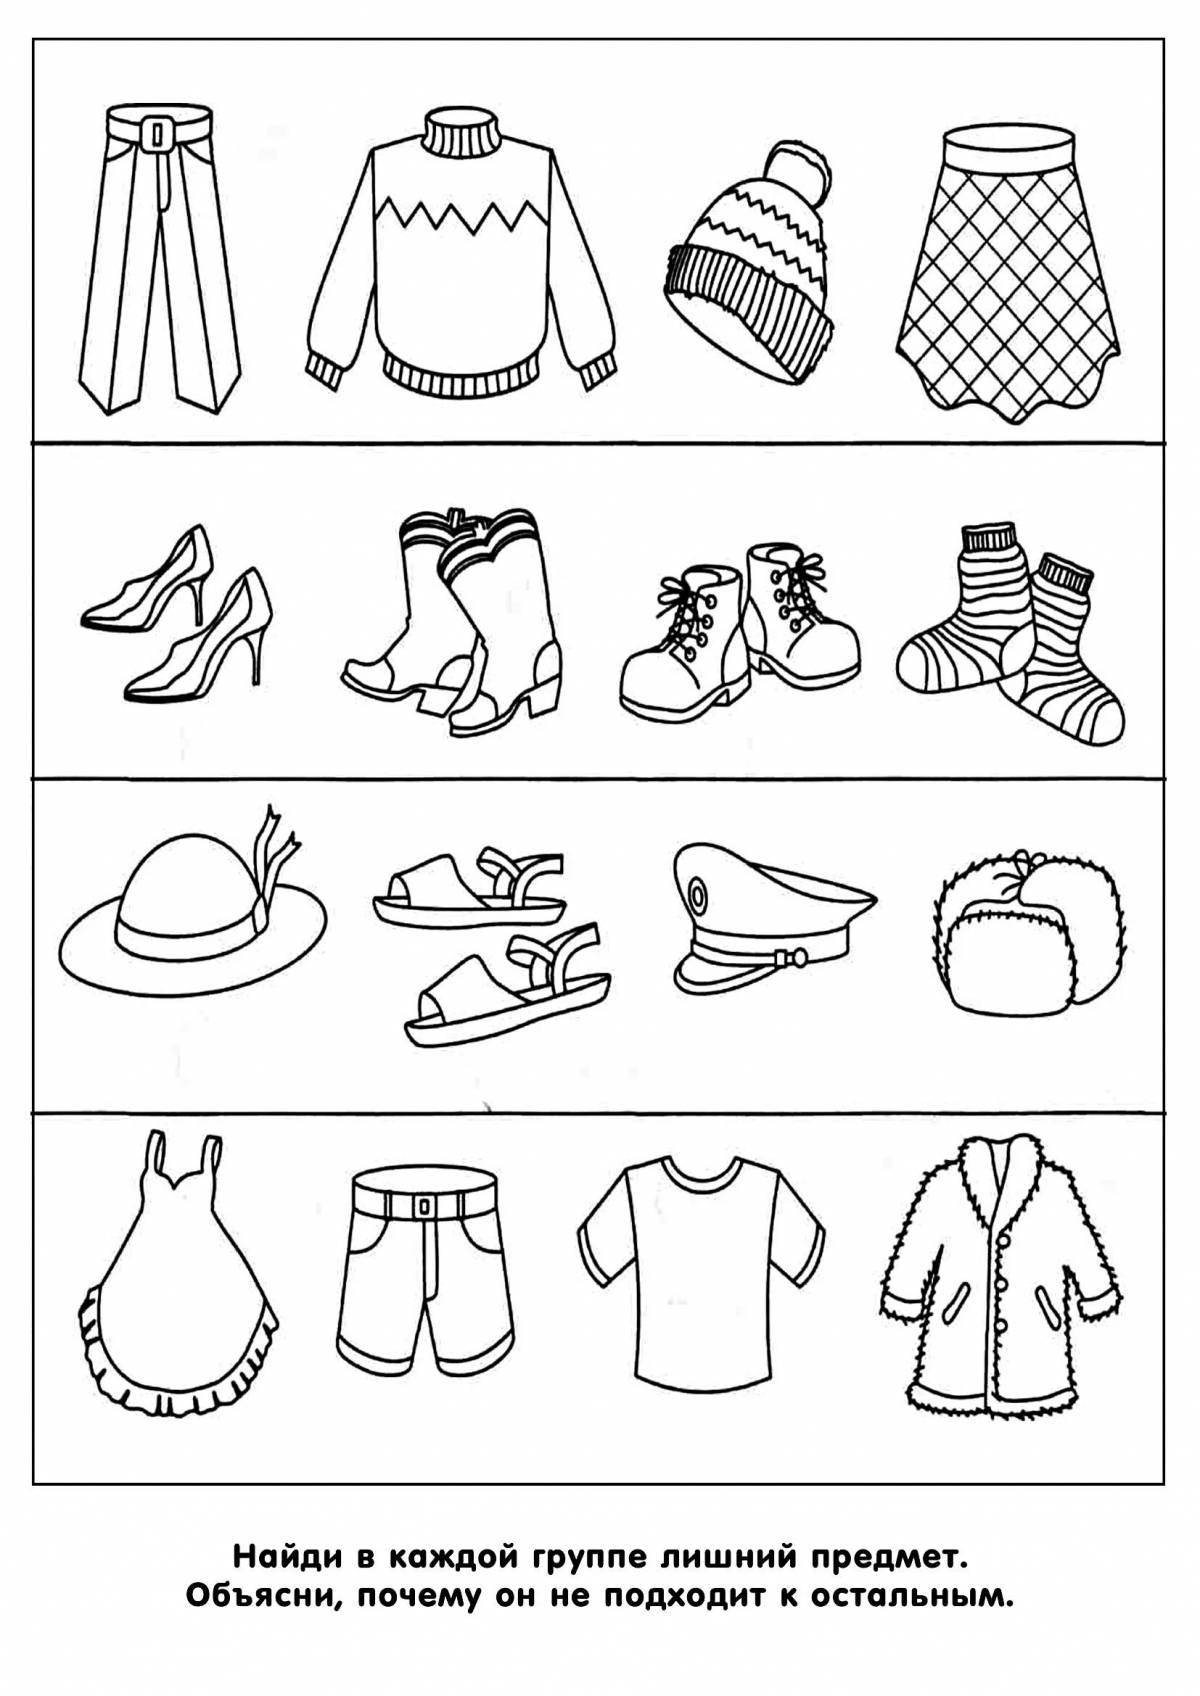 Daring clothes, shoes, hats, coloring